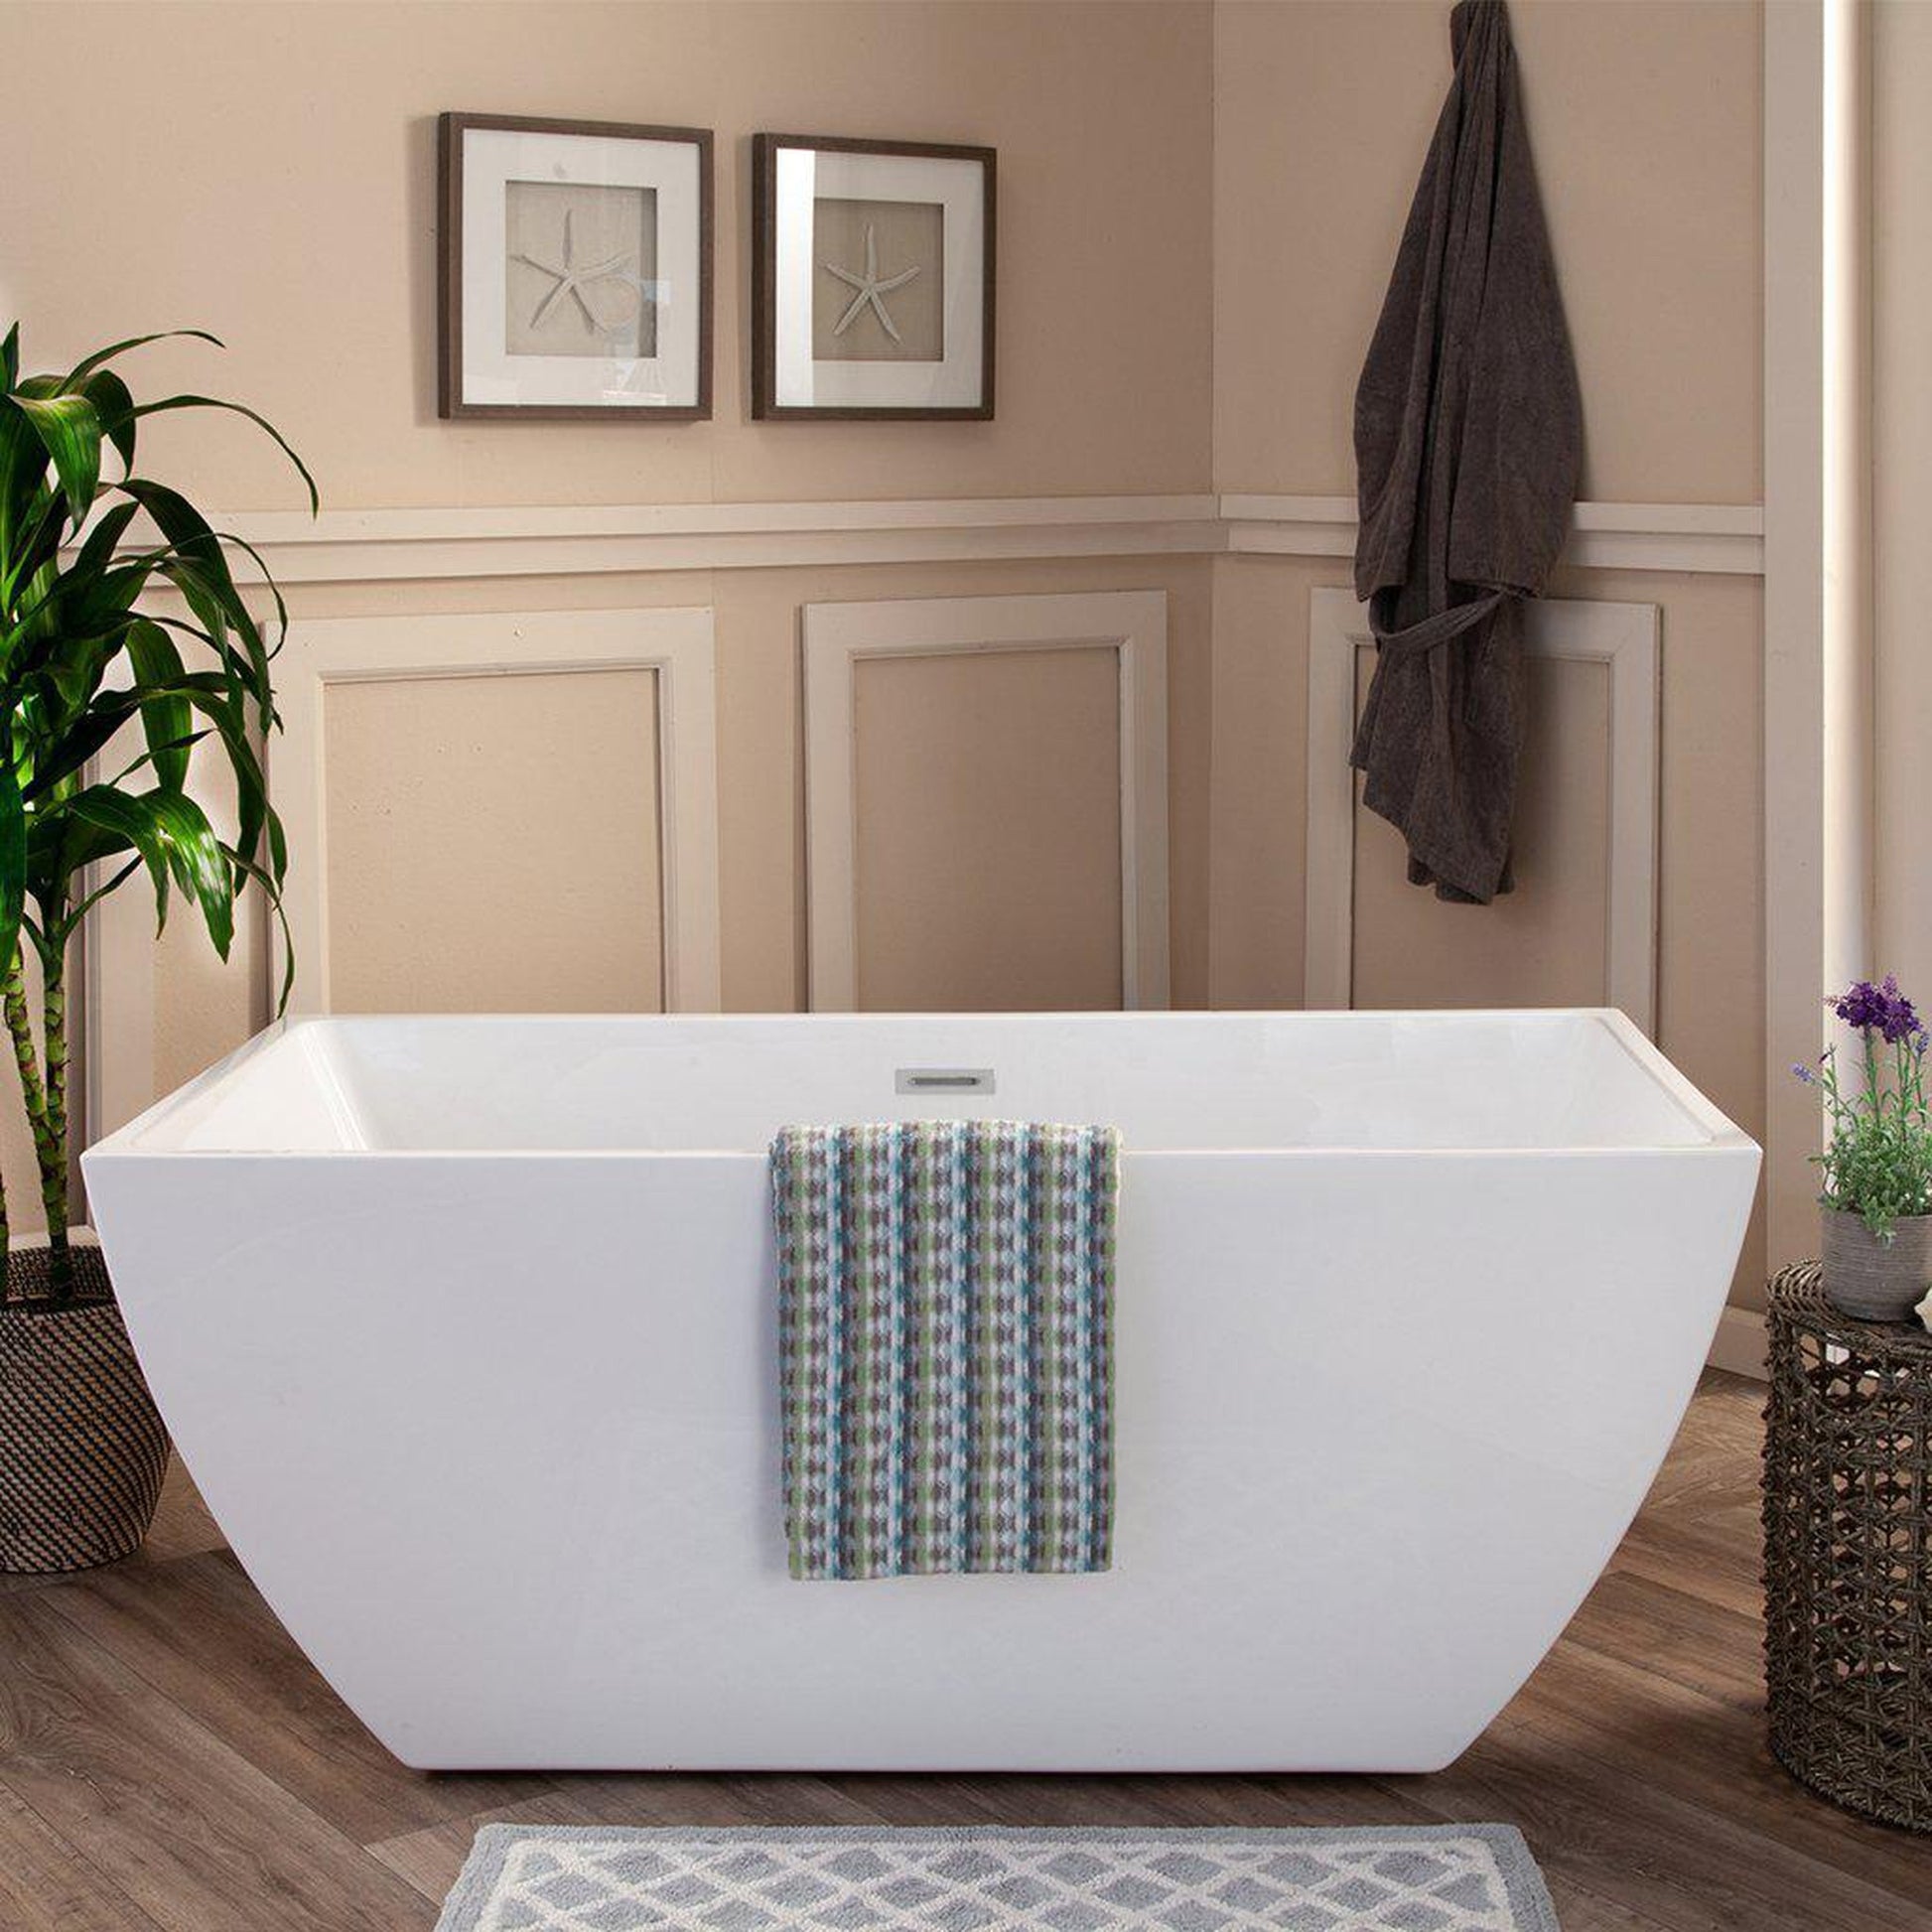 Altair Montague 59" x 30" White Acrylic Freestanding Bathtub